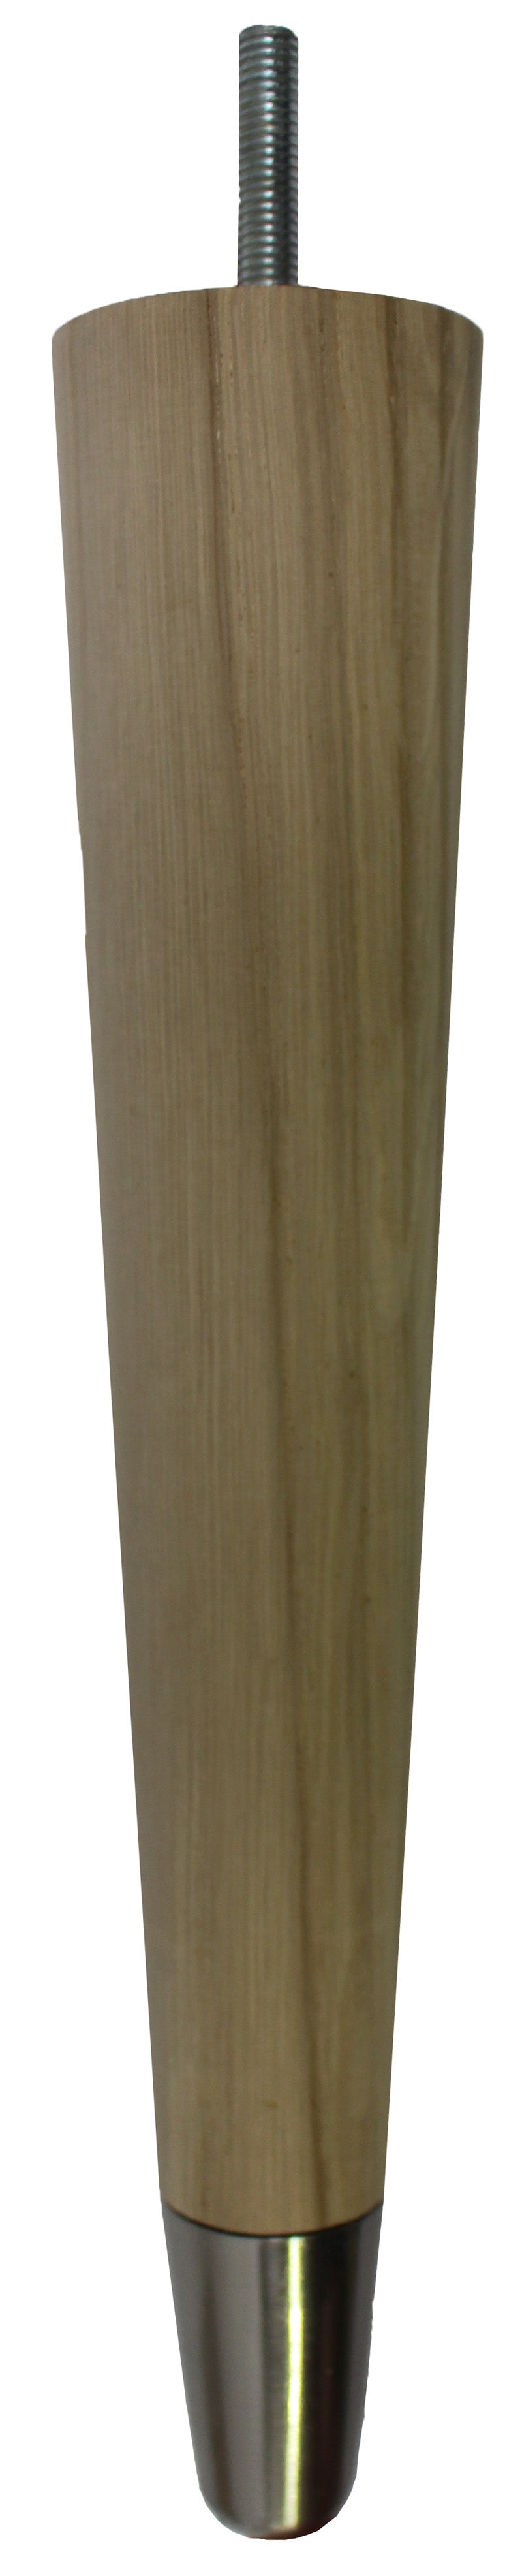 Liva Solid Oak Tapered Furniture Legs - Raw Finish - Brushed Chrome Slipper Cups - Set of 4